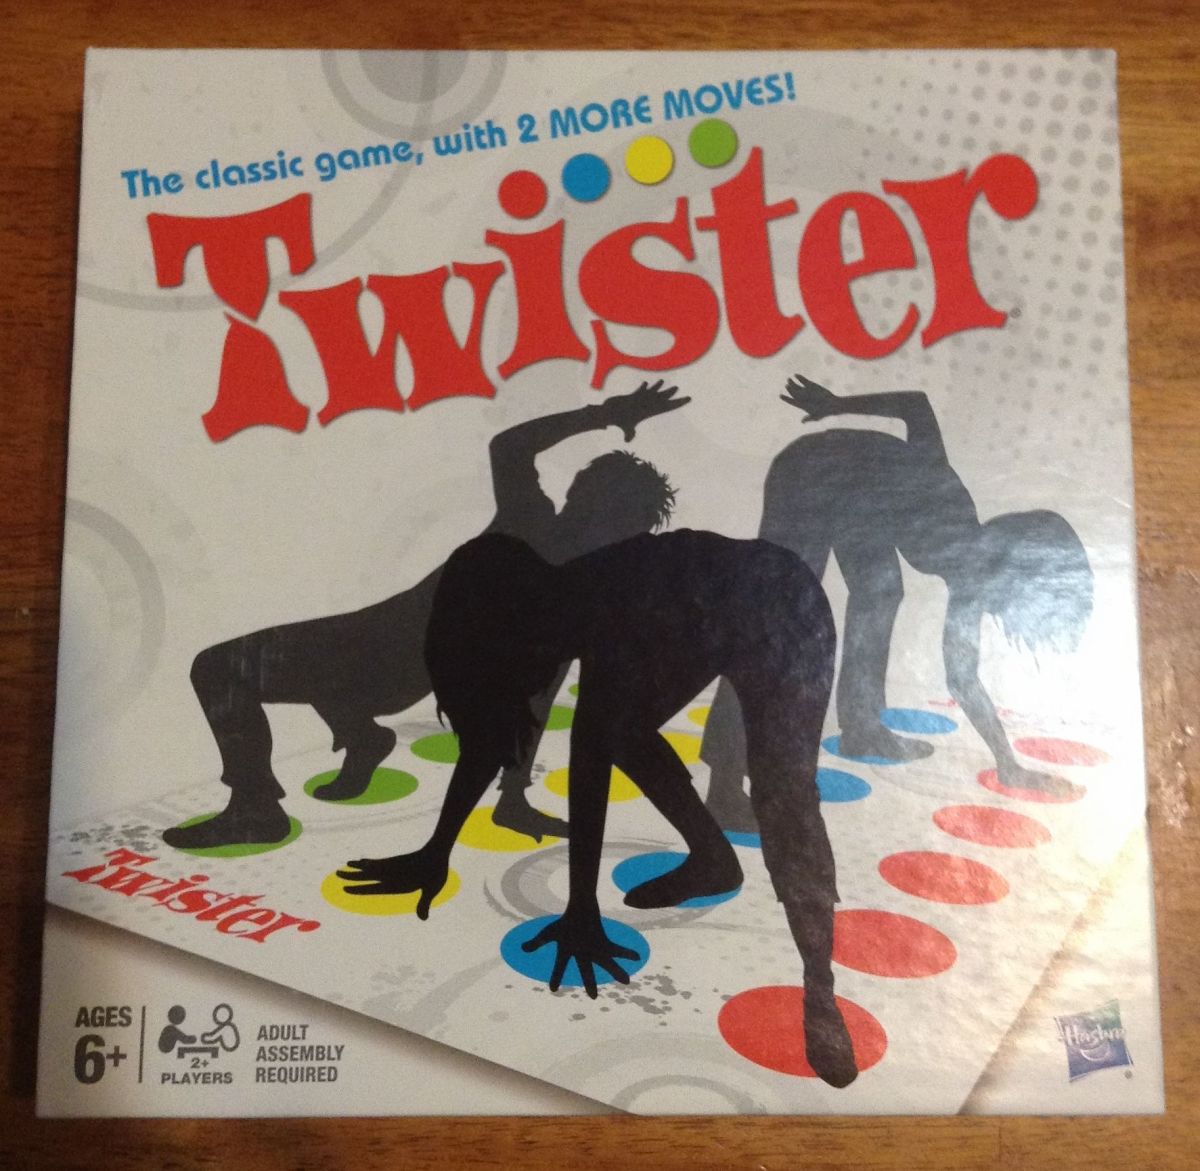 Twister - now with a new twist!